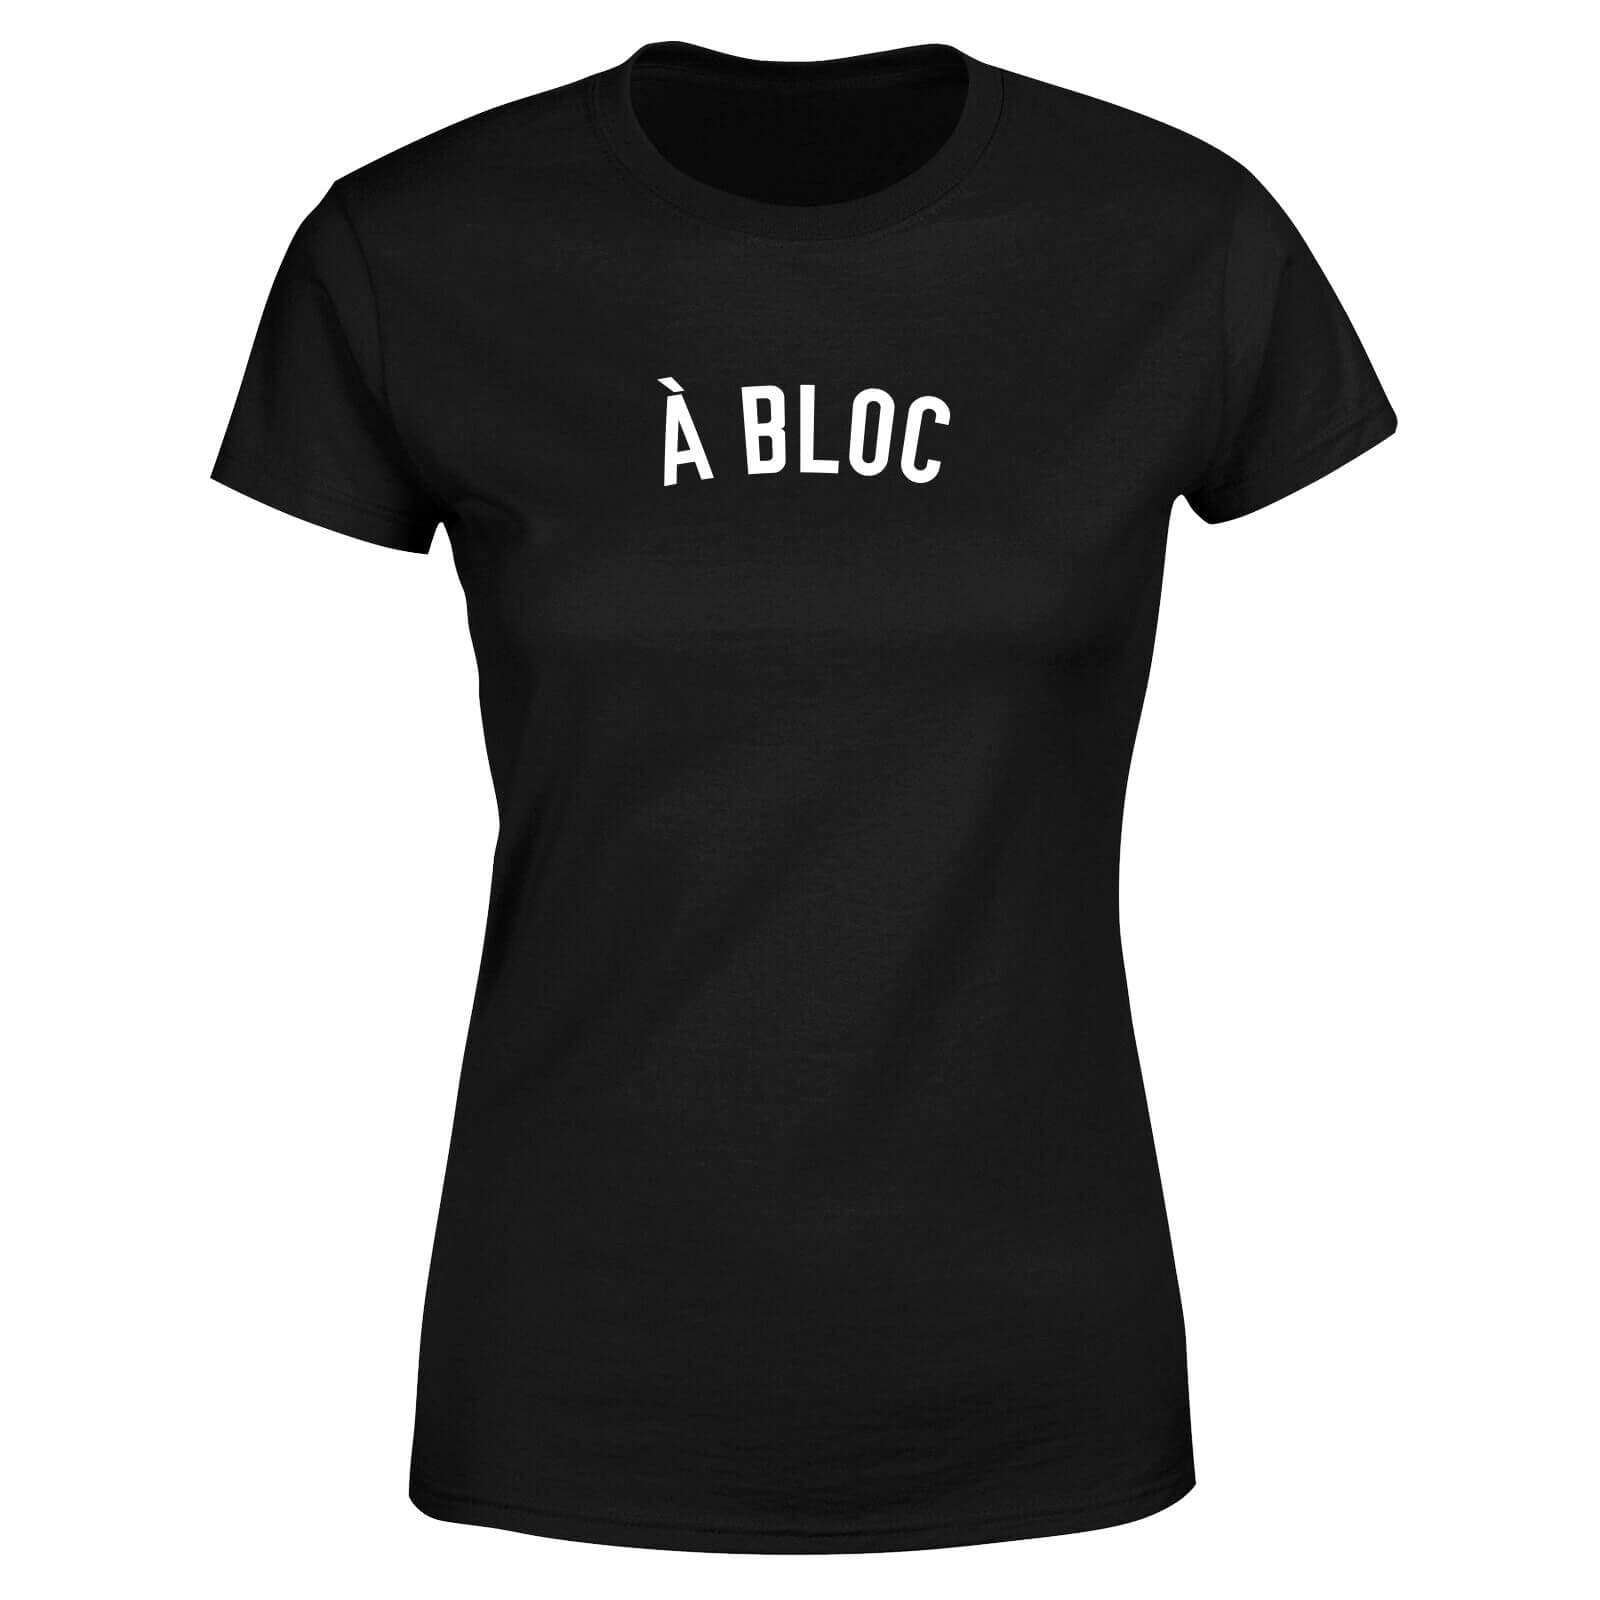 A Bloc Women's T-Shirt - Black - XL - Black